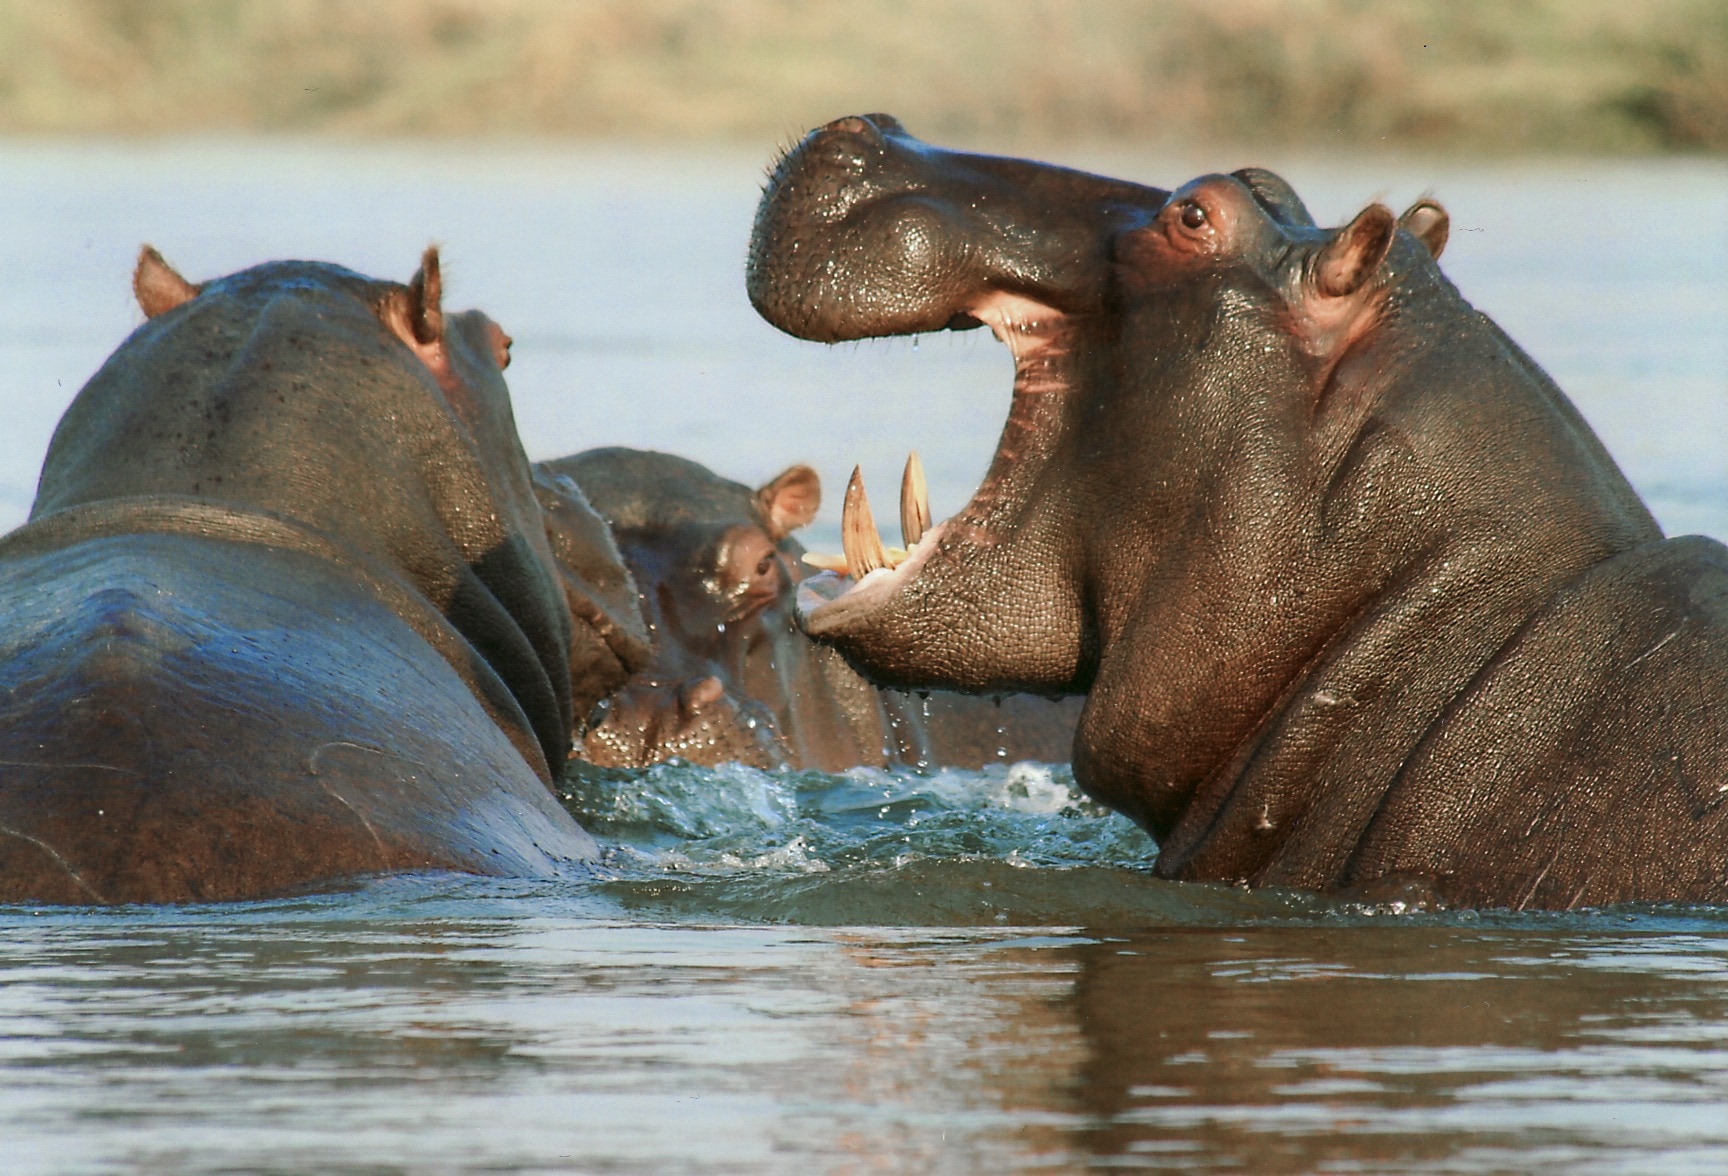 htee hippopotamus in river photos